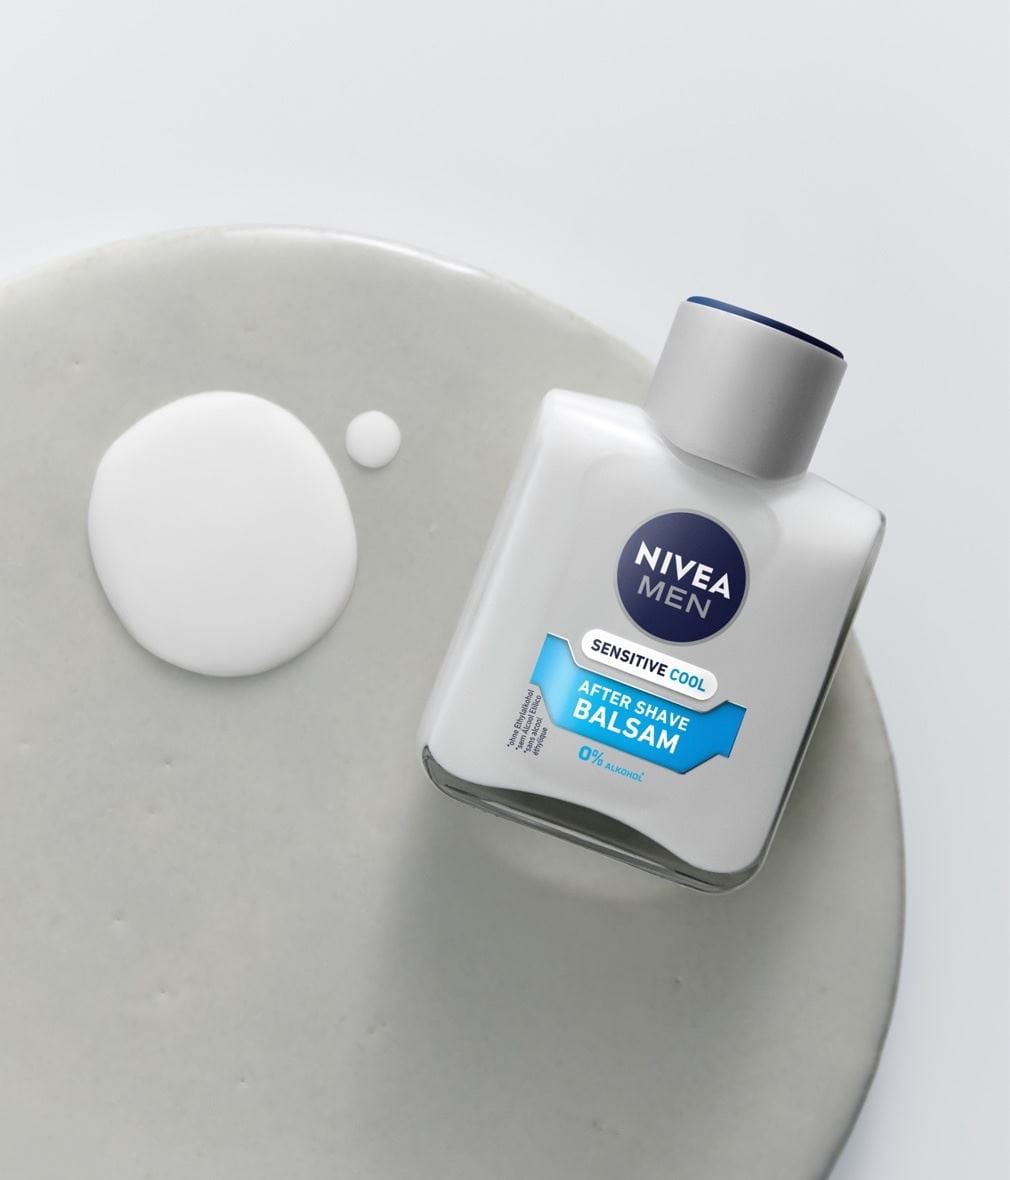 NIVEA Sensitve Cool After Shave Balsam Produktabbildung mit Balsam